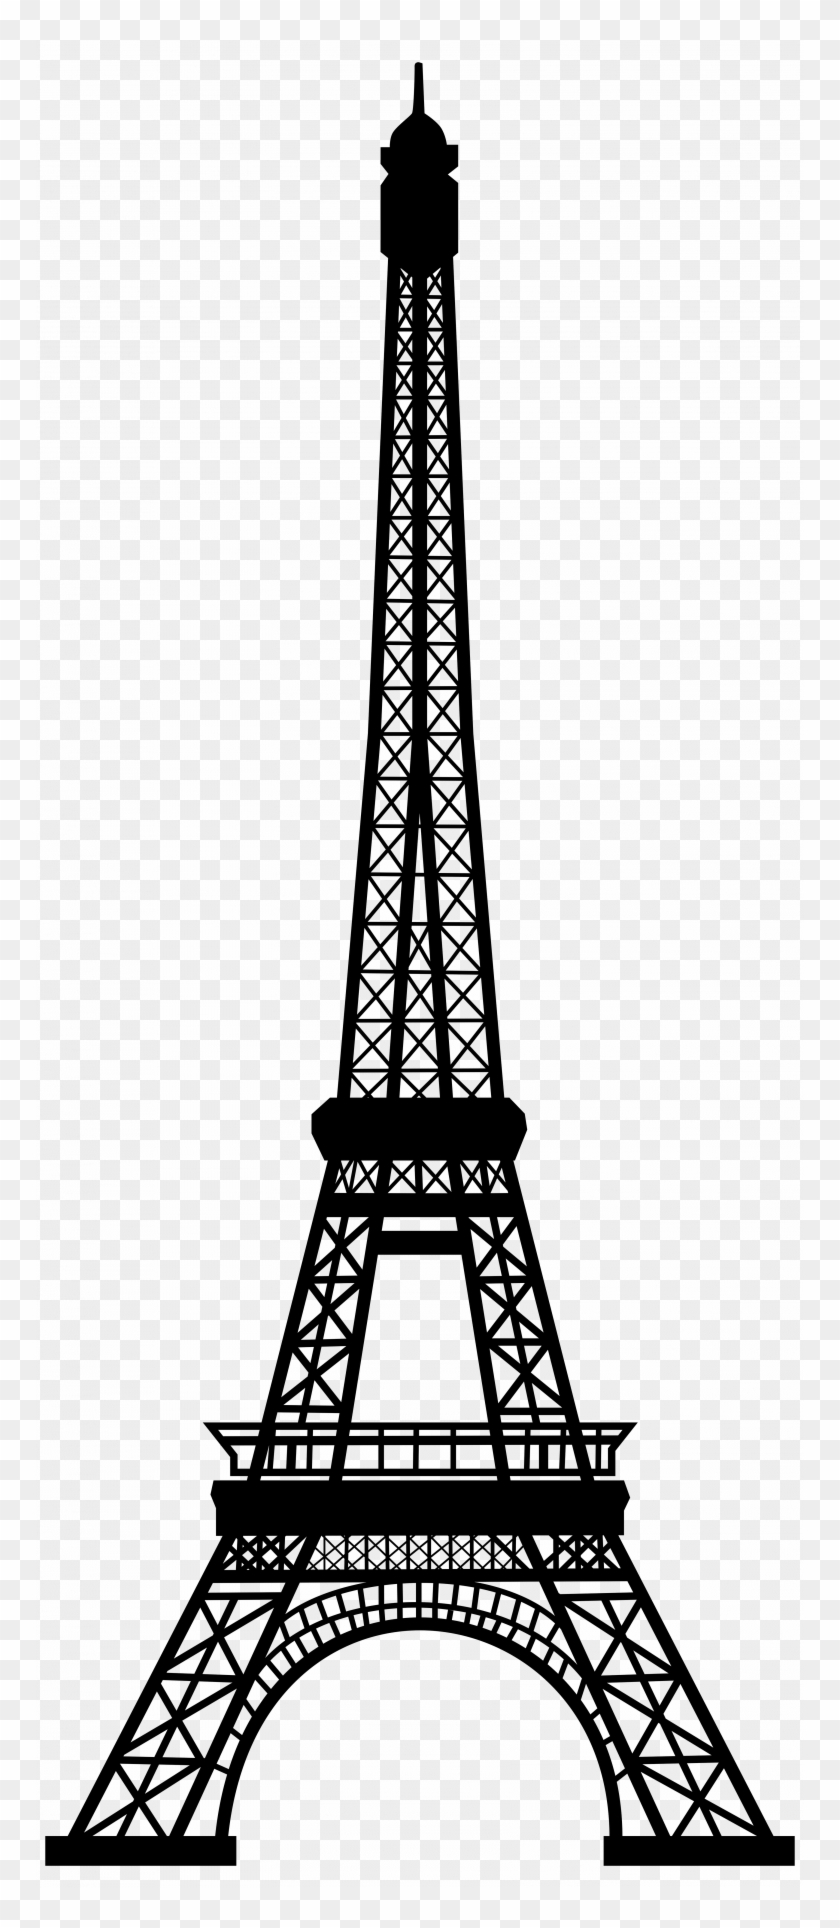 Download Eiffel Tower Clip Art - Download Eiffel Tower Clip Art #1586354